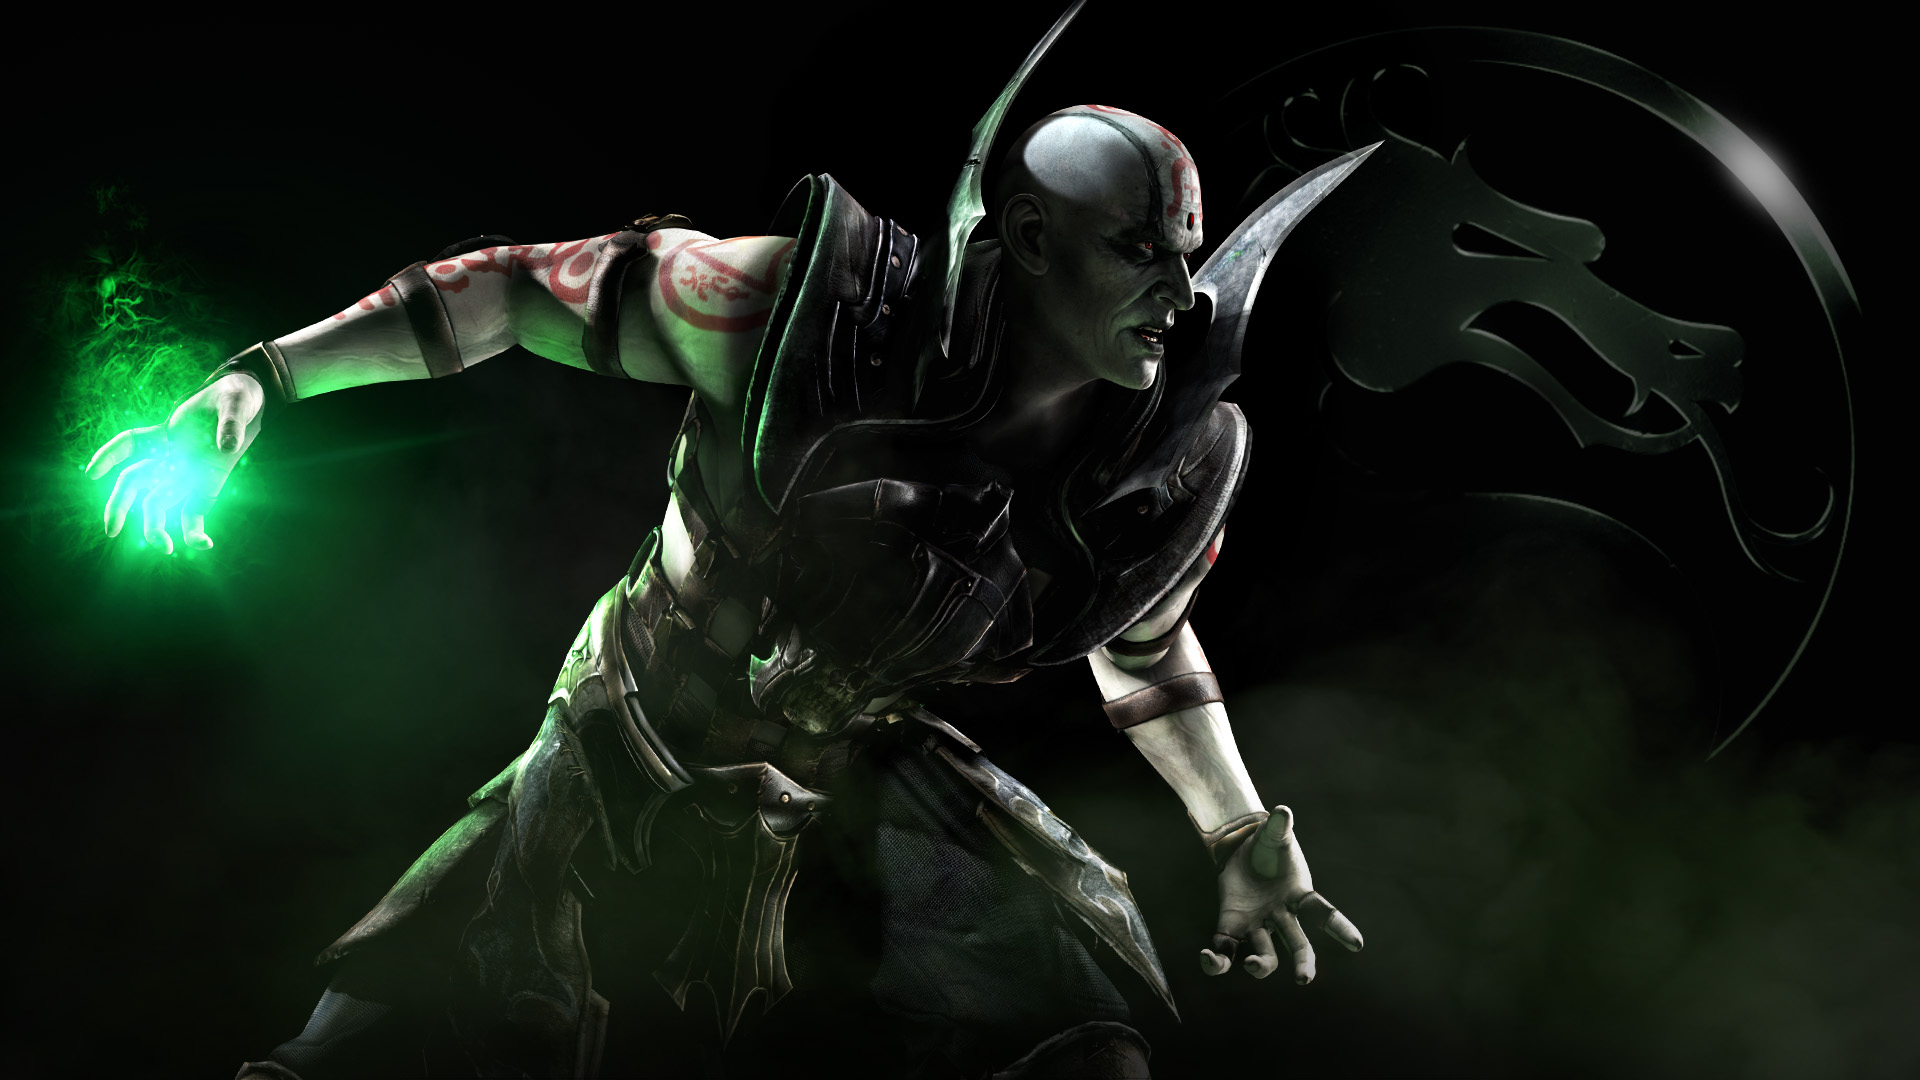 Mortal Kombat X brings back older, wiser, nastier Kano